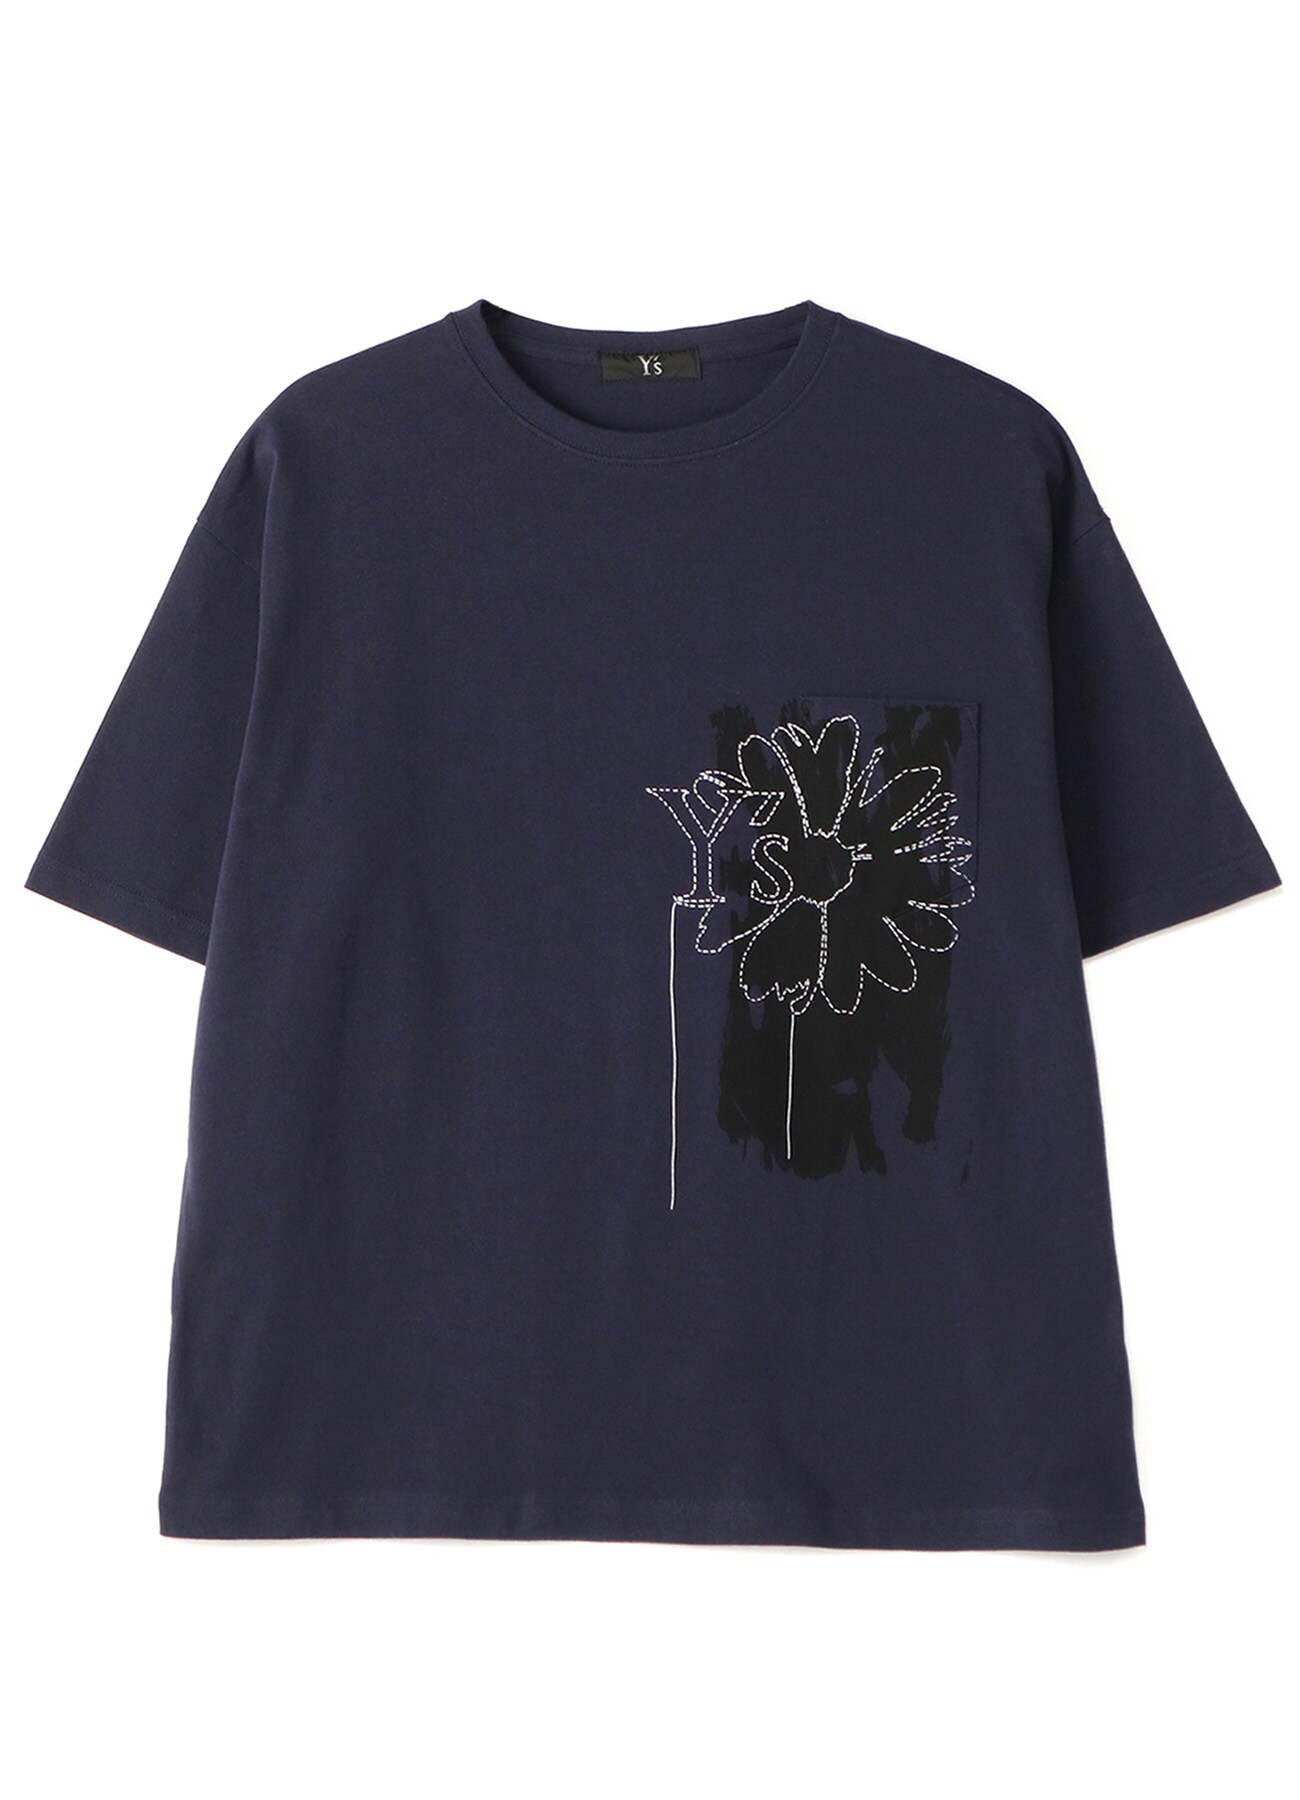 -Online EXCLUSIVE- Y's Flower T-shirt